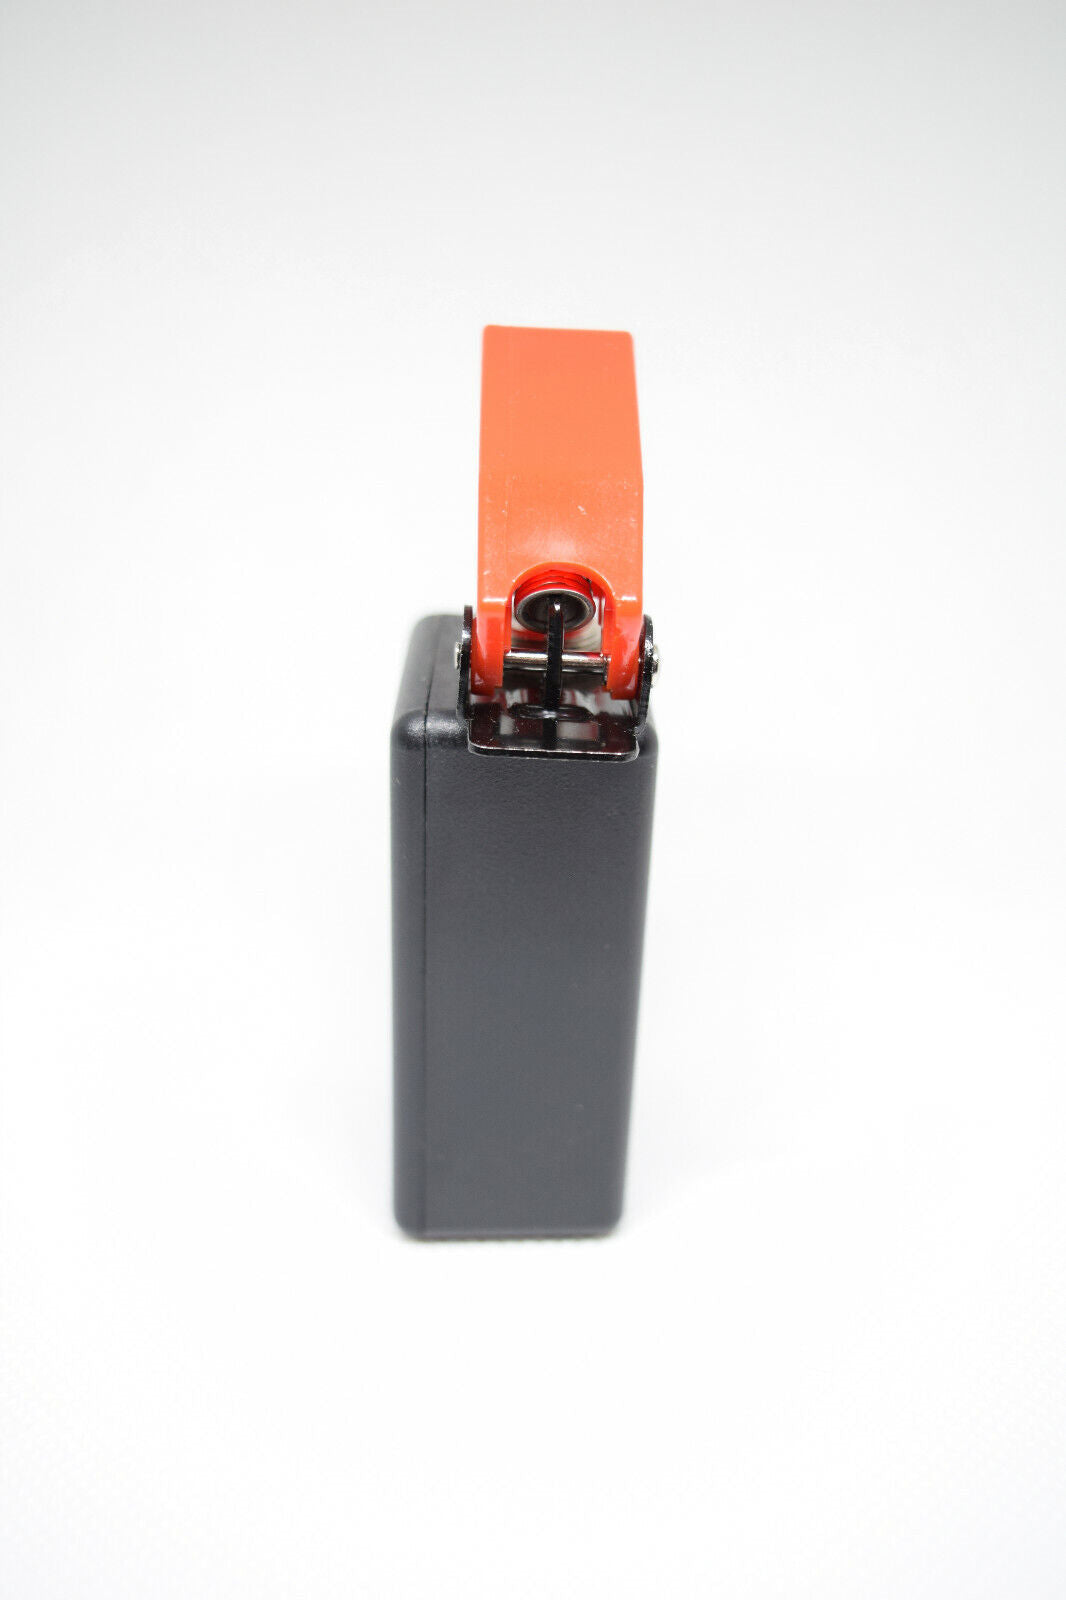 Custom Remote Bomb Detonator (C4, Plastic Explosive) Prop for Cosplay or Theater